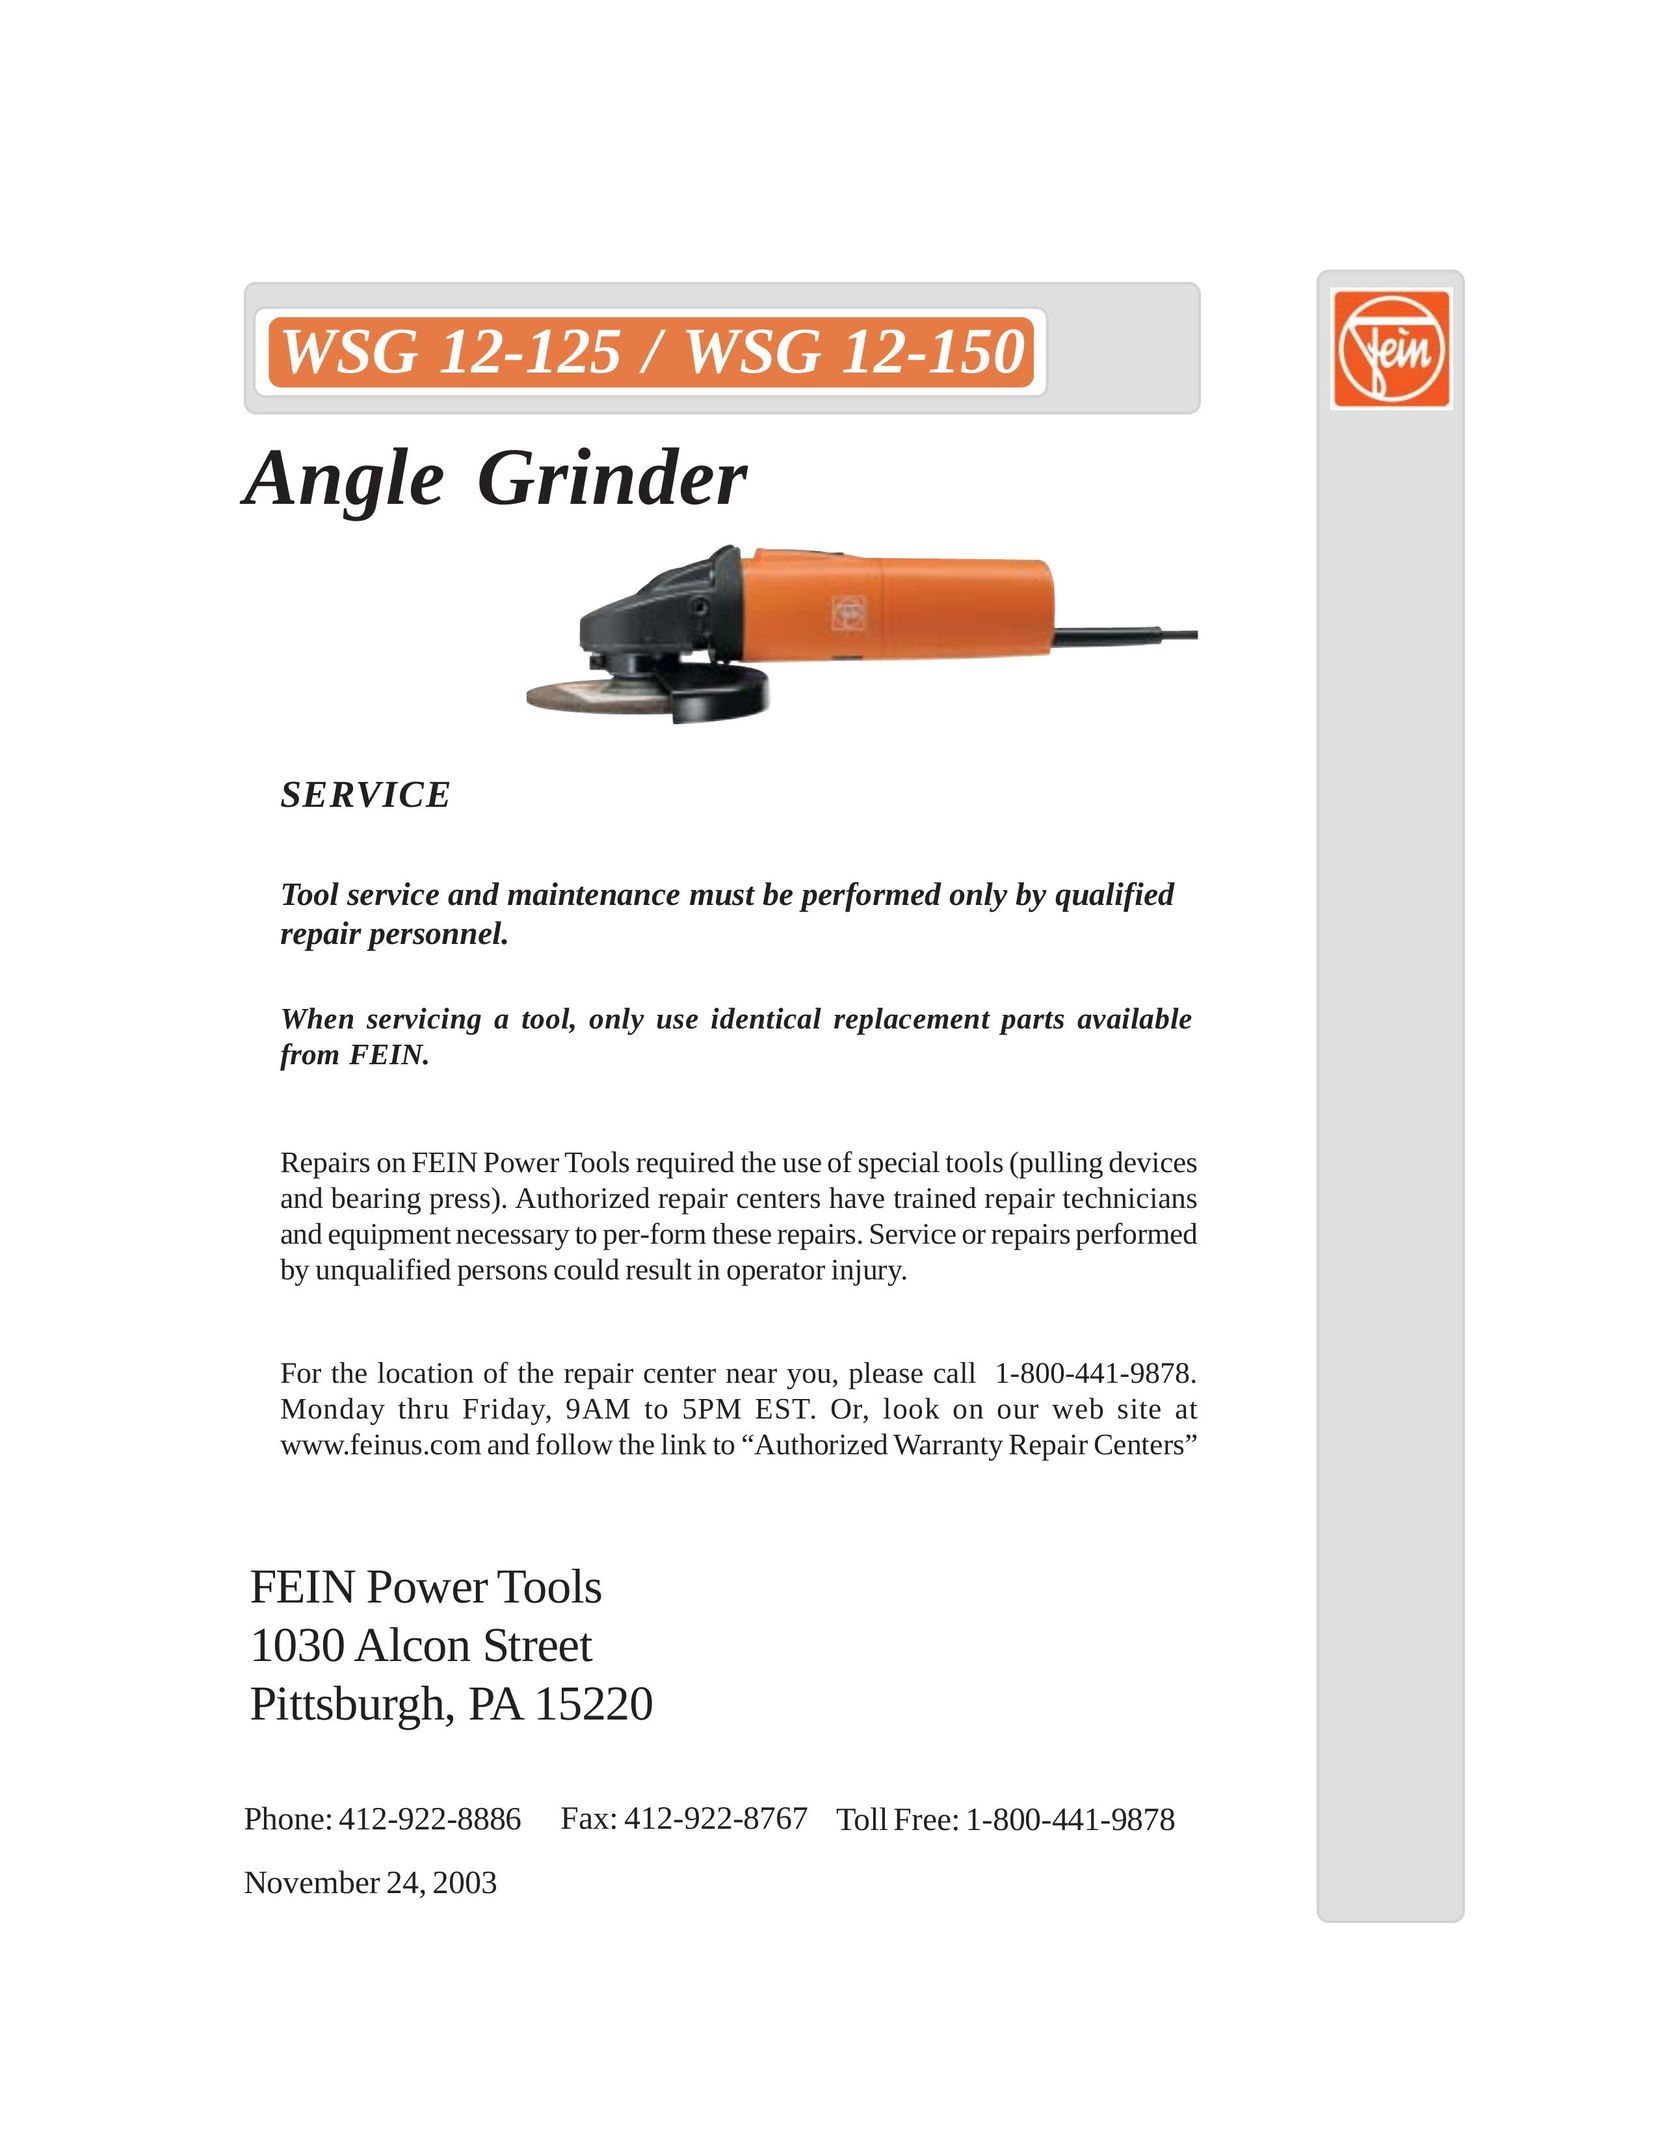 FEIN Power Tools WSG 12-150 Grinder User Manual